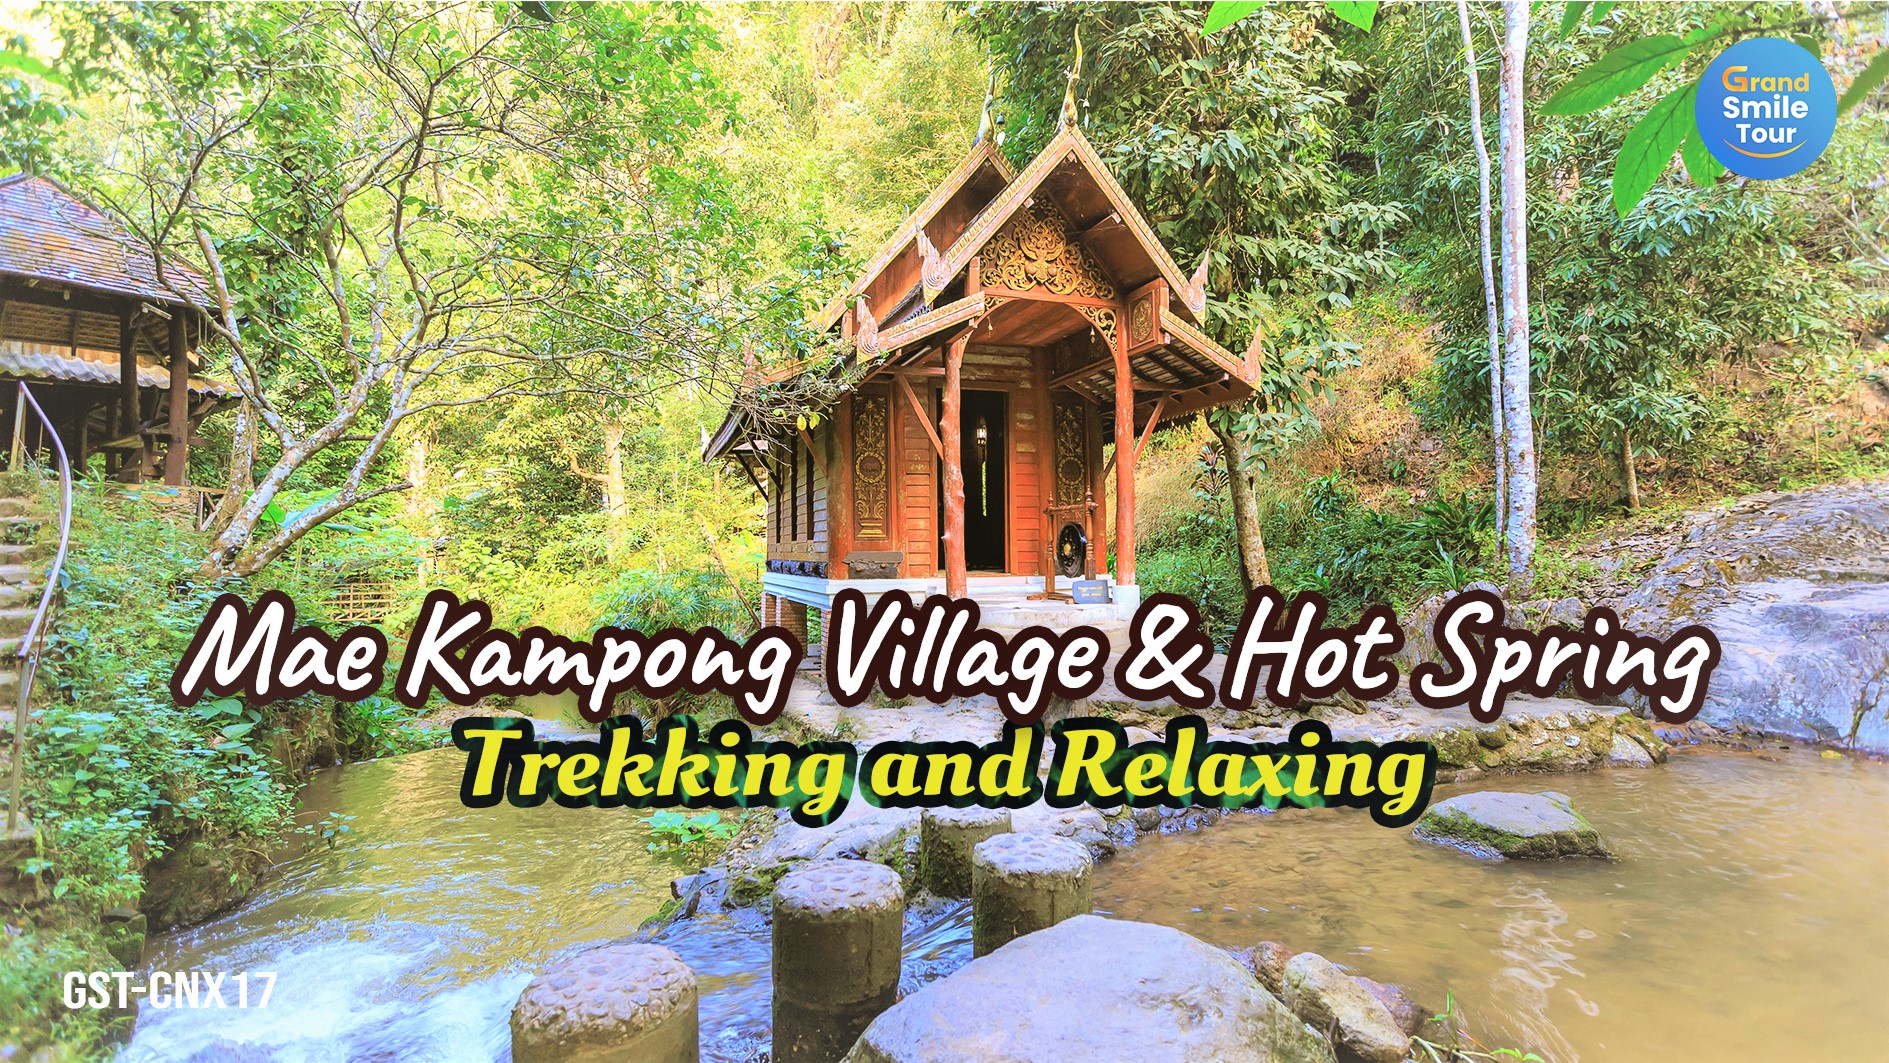 GST-CNX17 Mae Kam Pong Village & Hot Spring